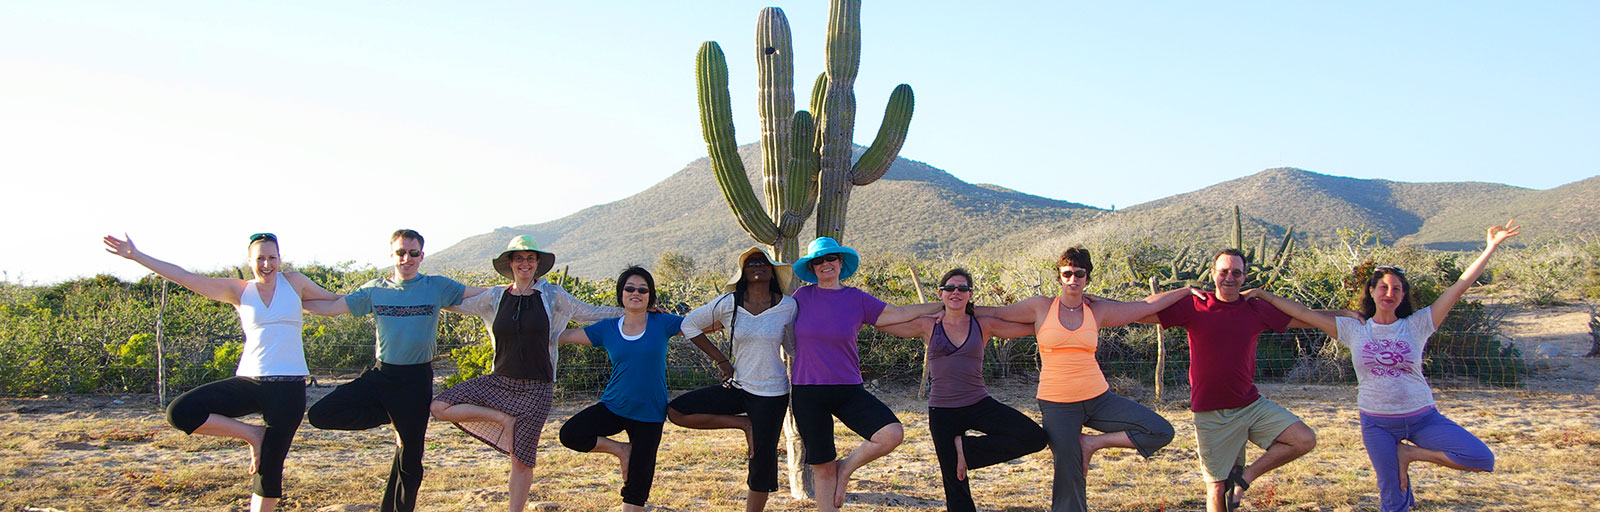 Mexico Yoga Retreats: Tree Pose with Cactus